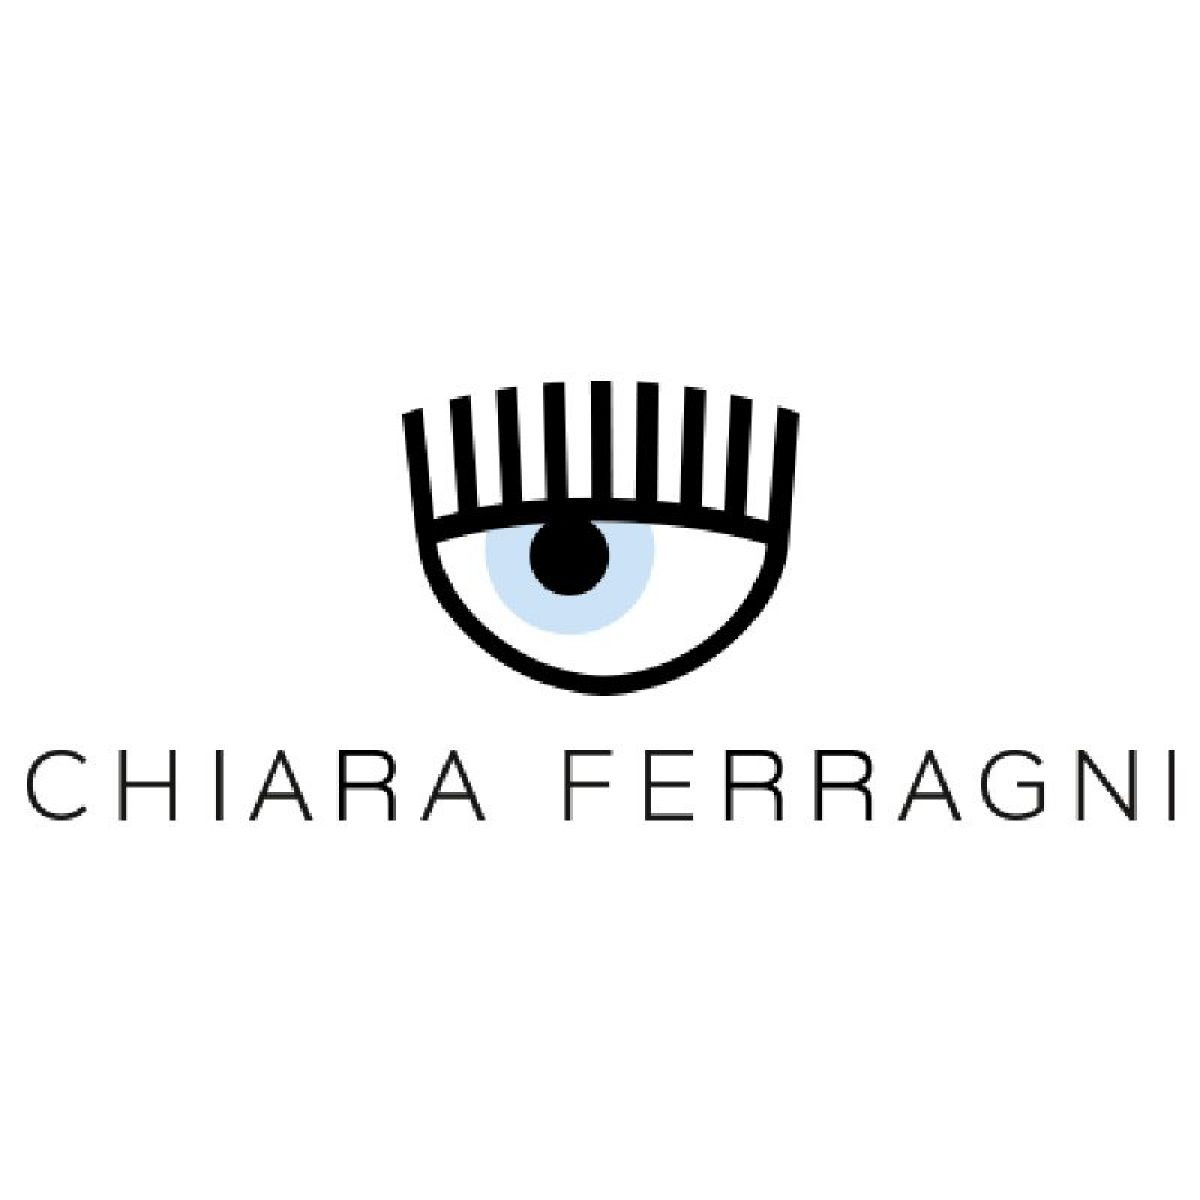 Chiara Ferragni